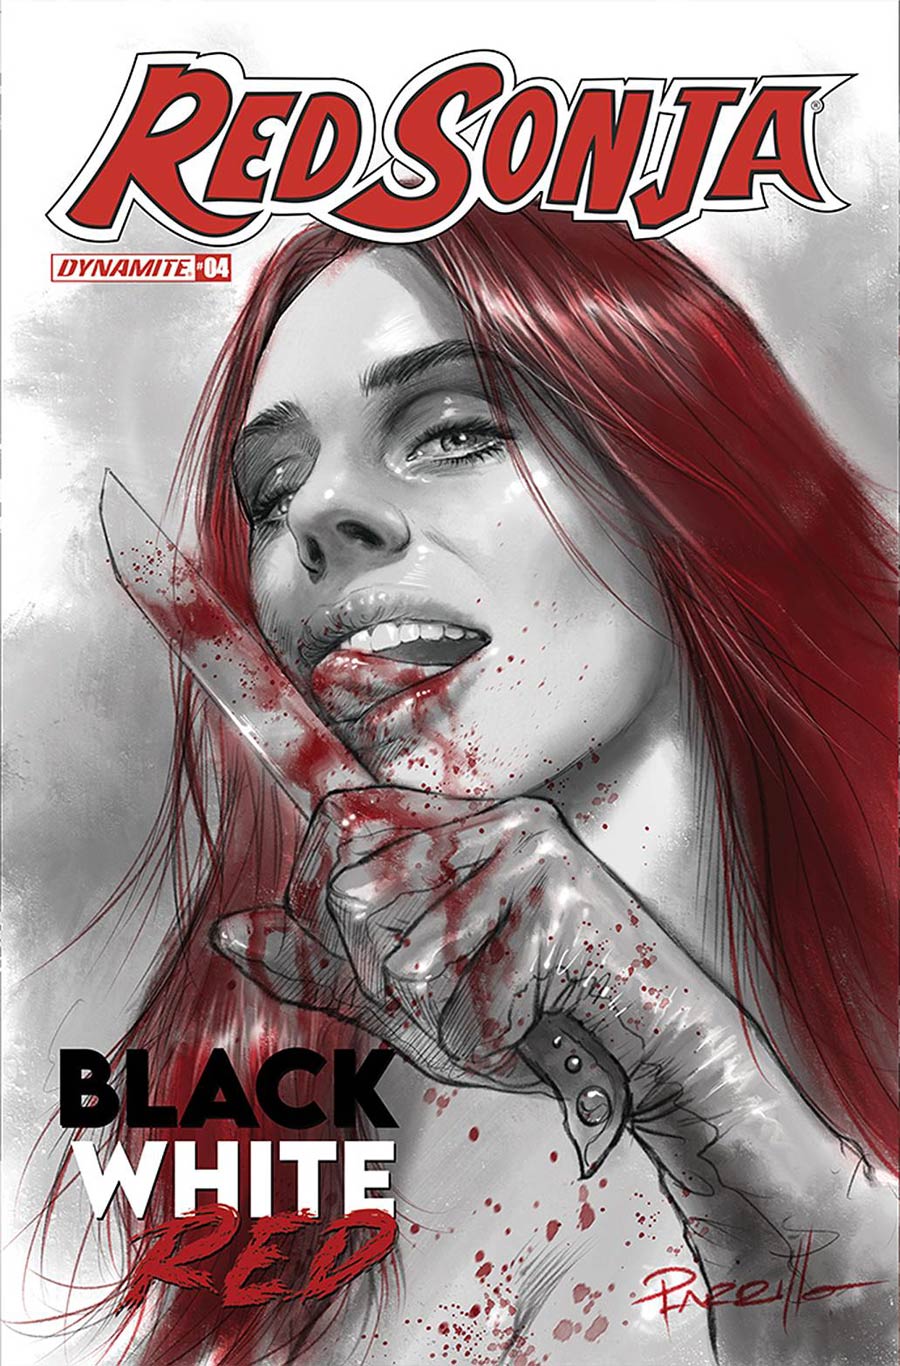 Red Sonja Black White Red #4 Cover A Regular Lucio Parrillo Cover